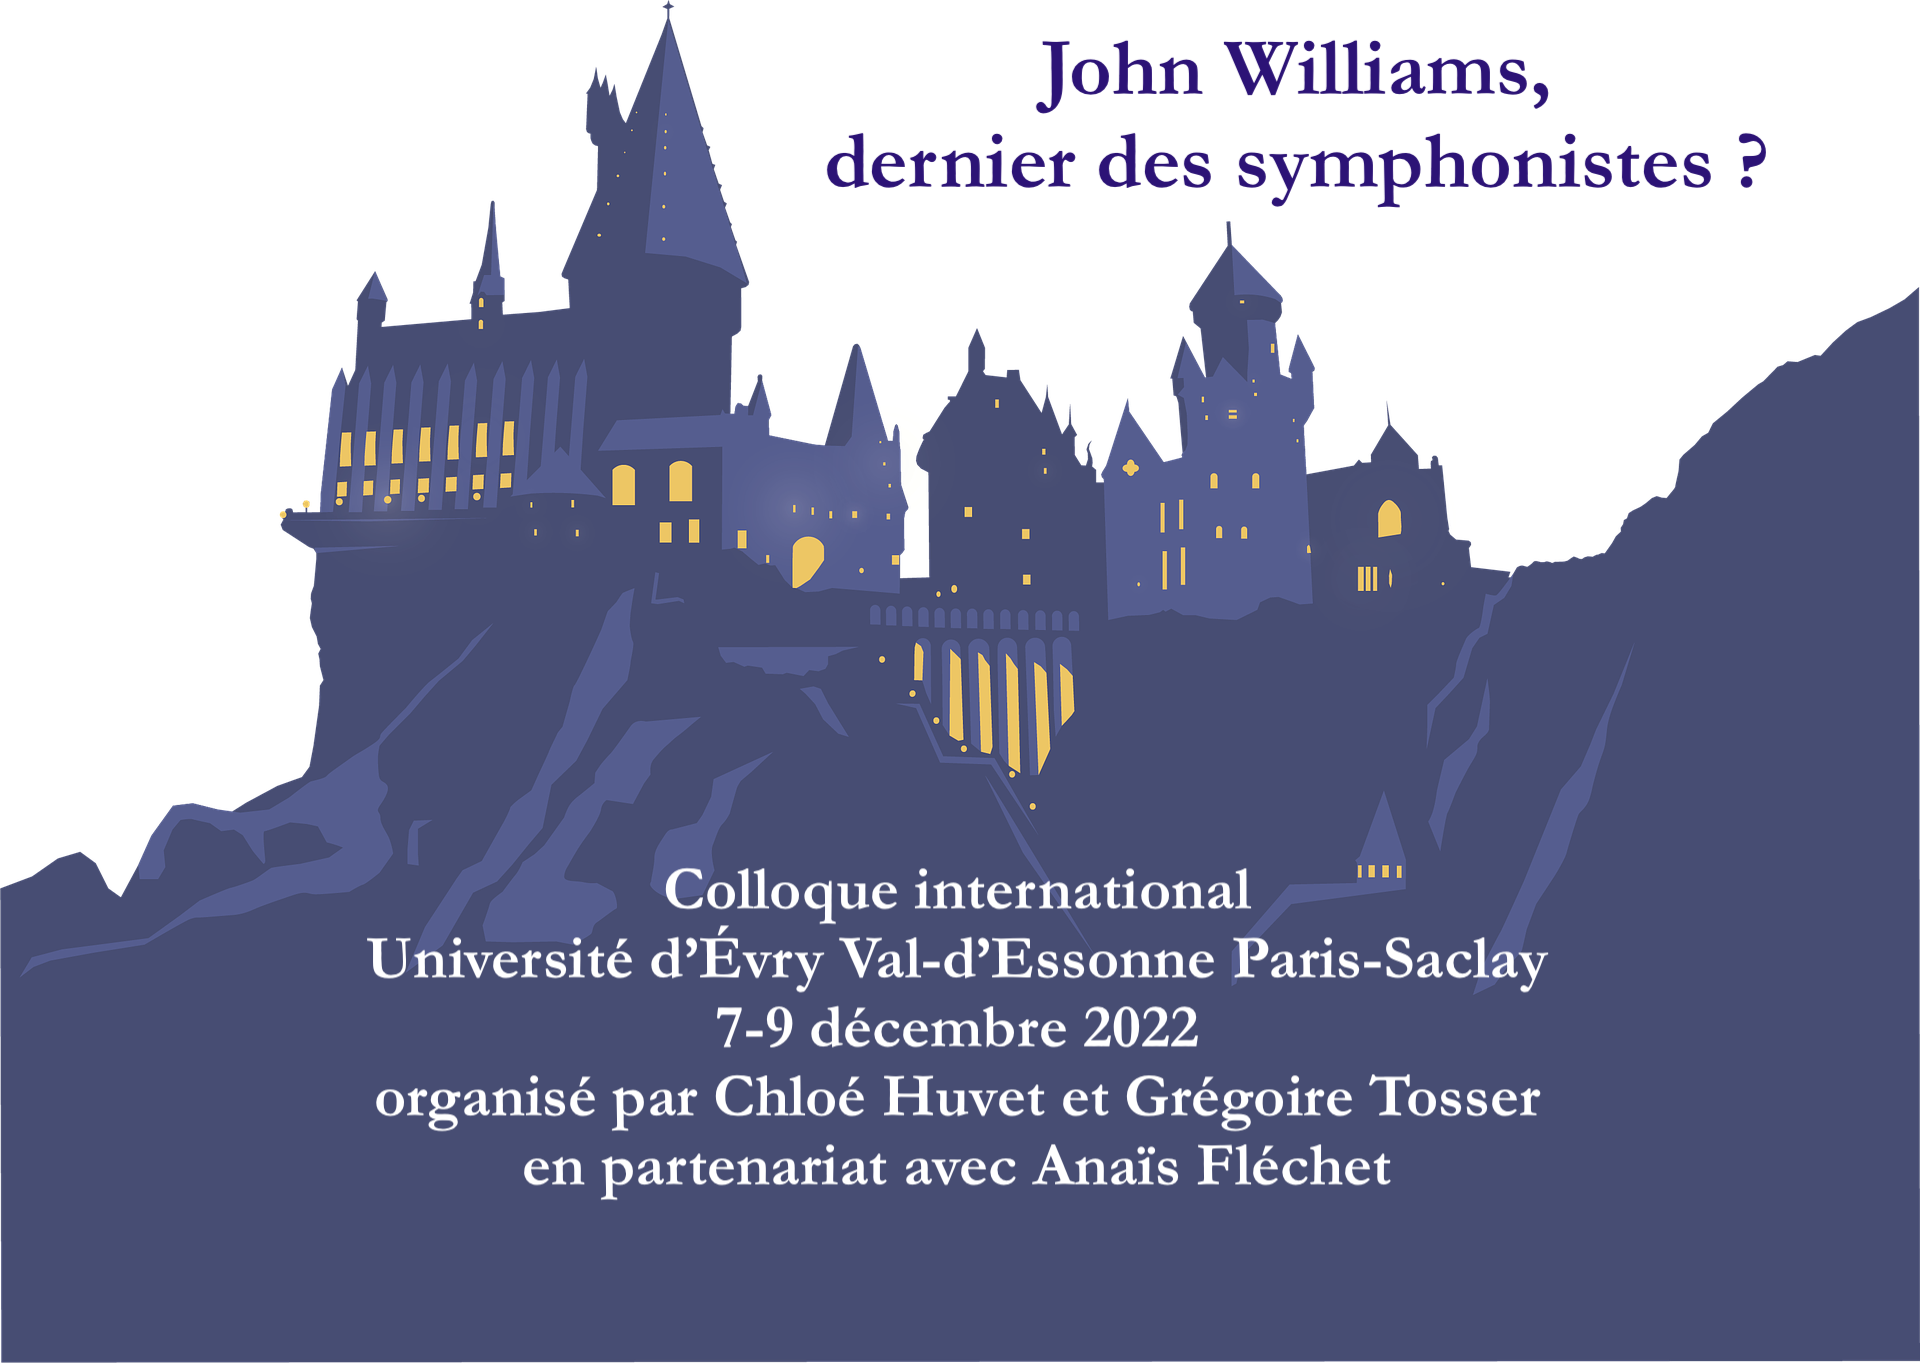 Appel Colloque international John Williams, dernier des symphonistes ?